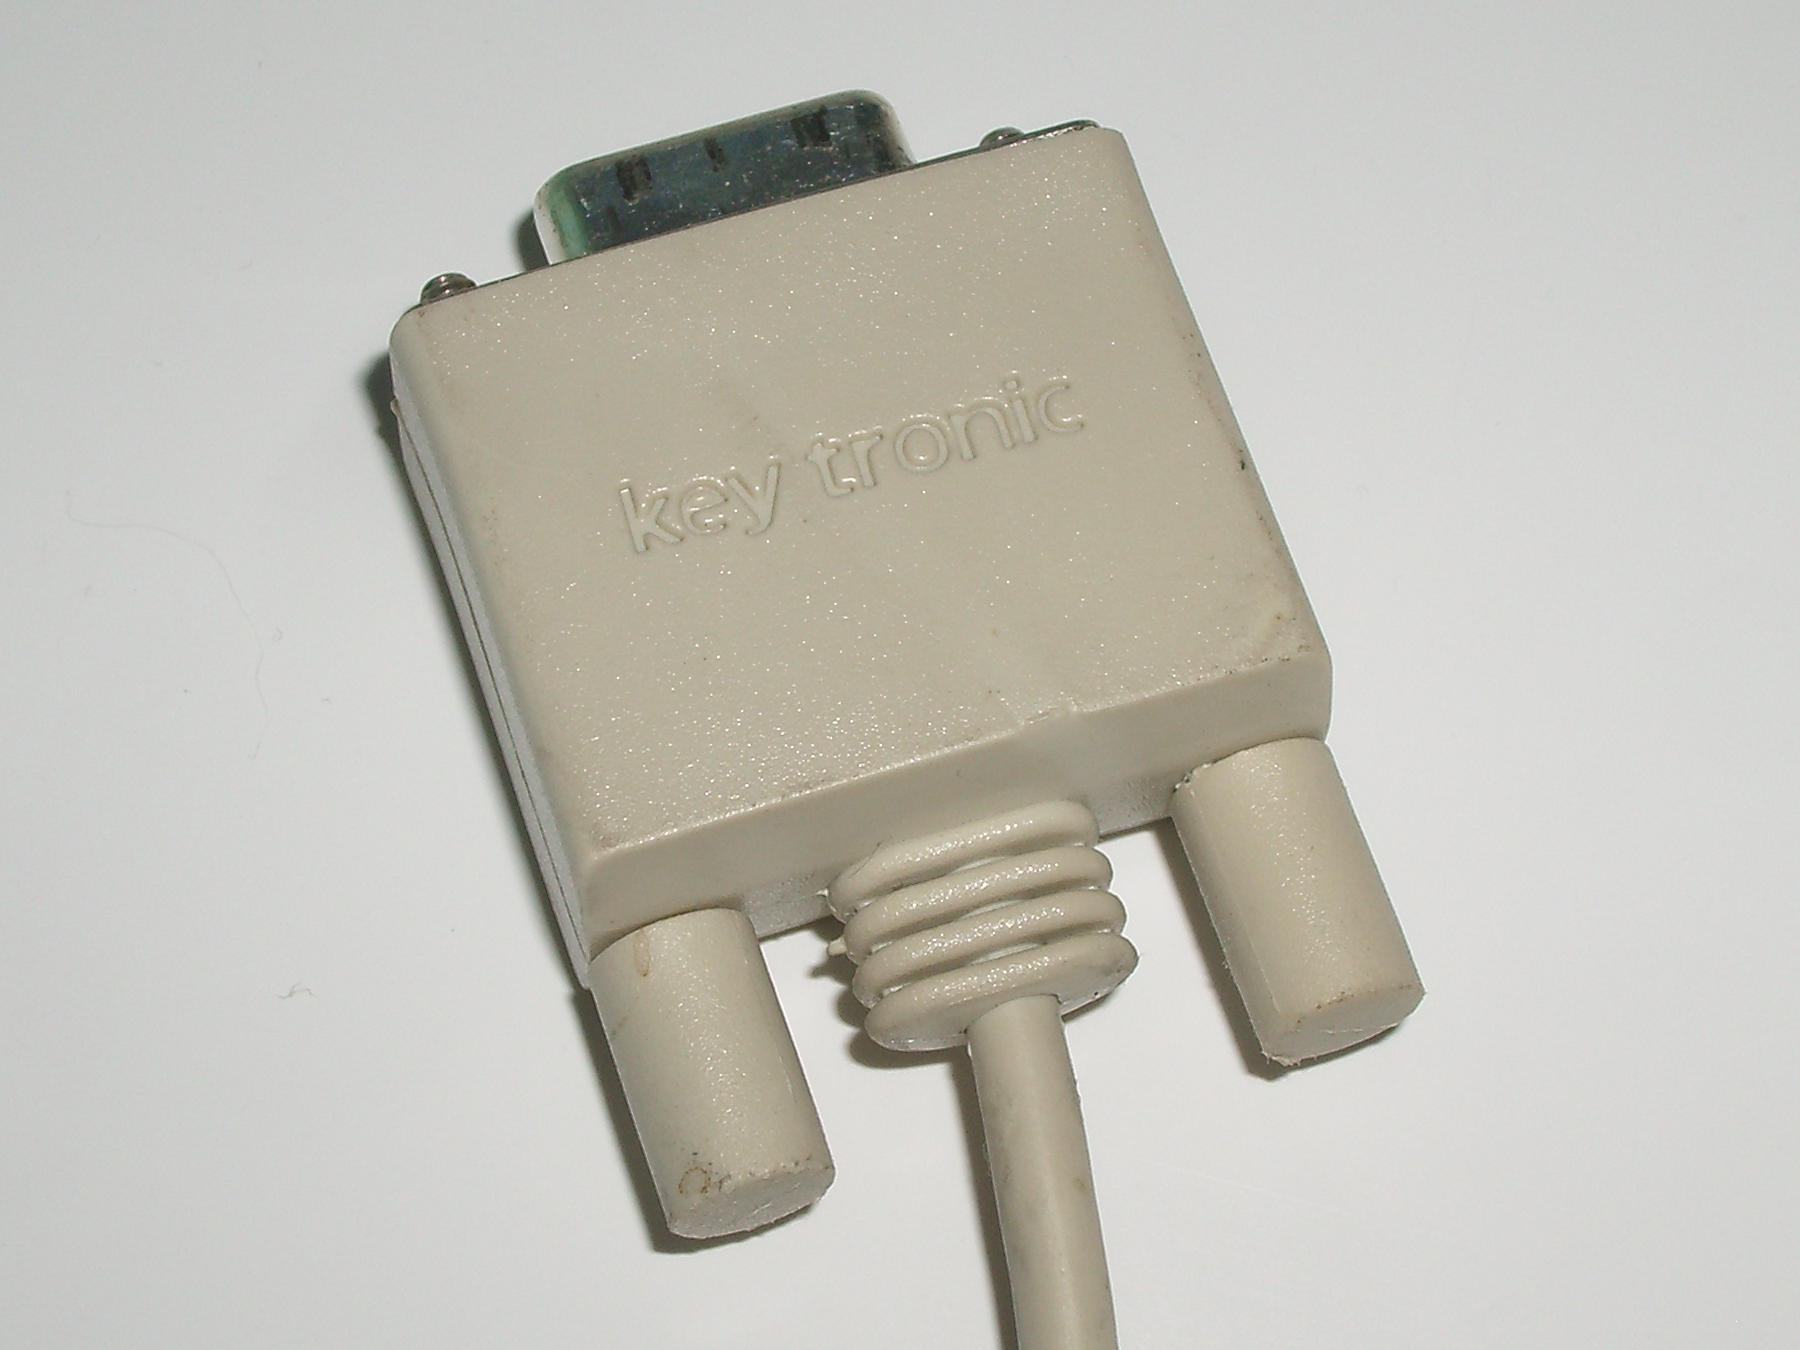 key tronic Professional Series Mouse -- branded DE9 plug.jpg